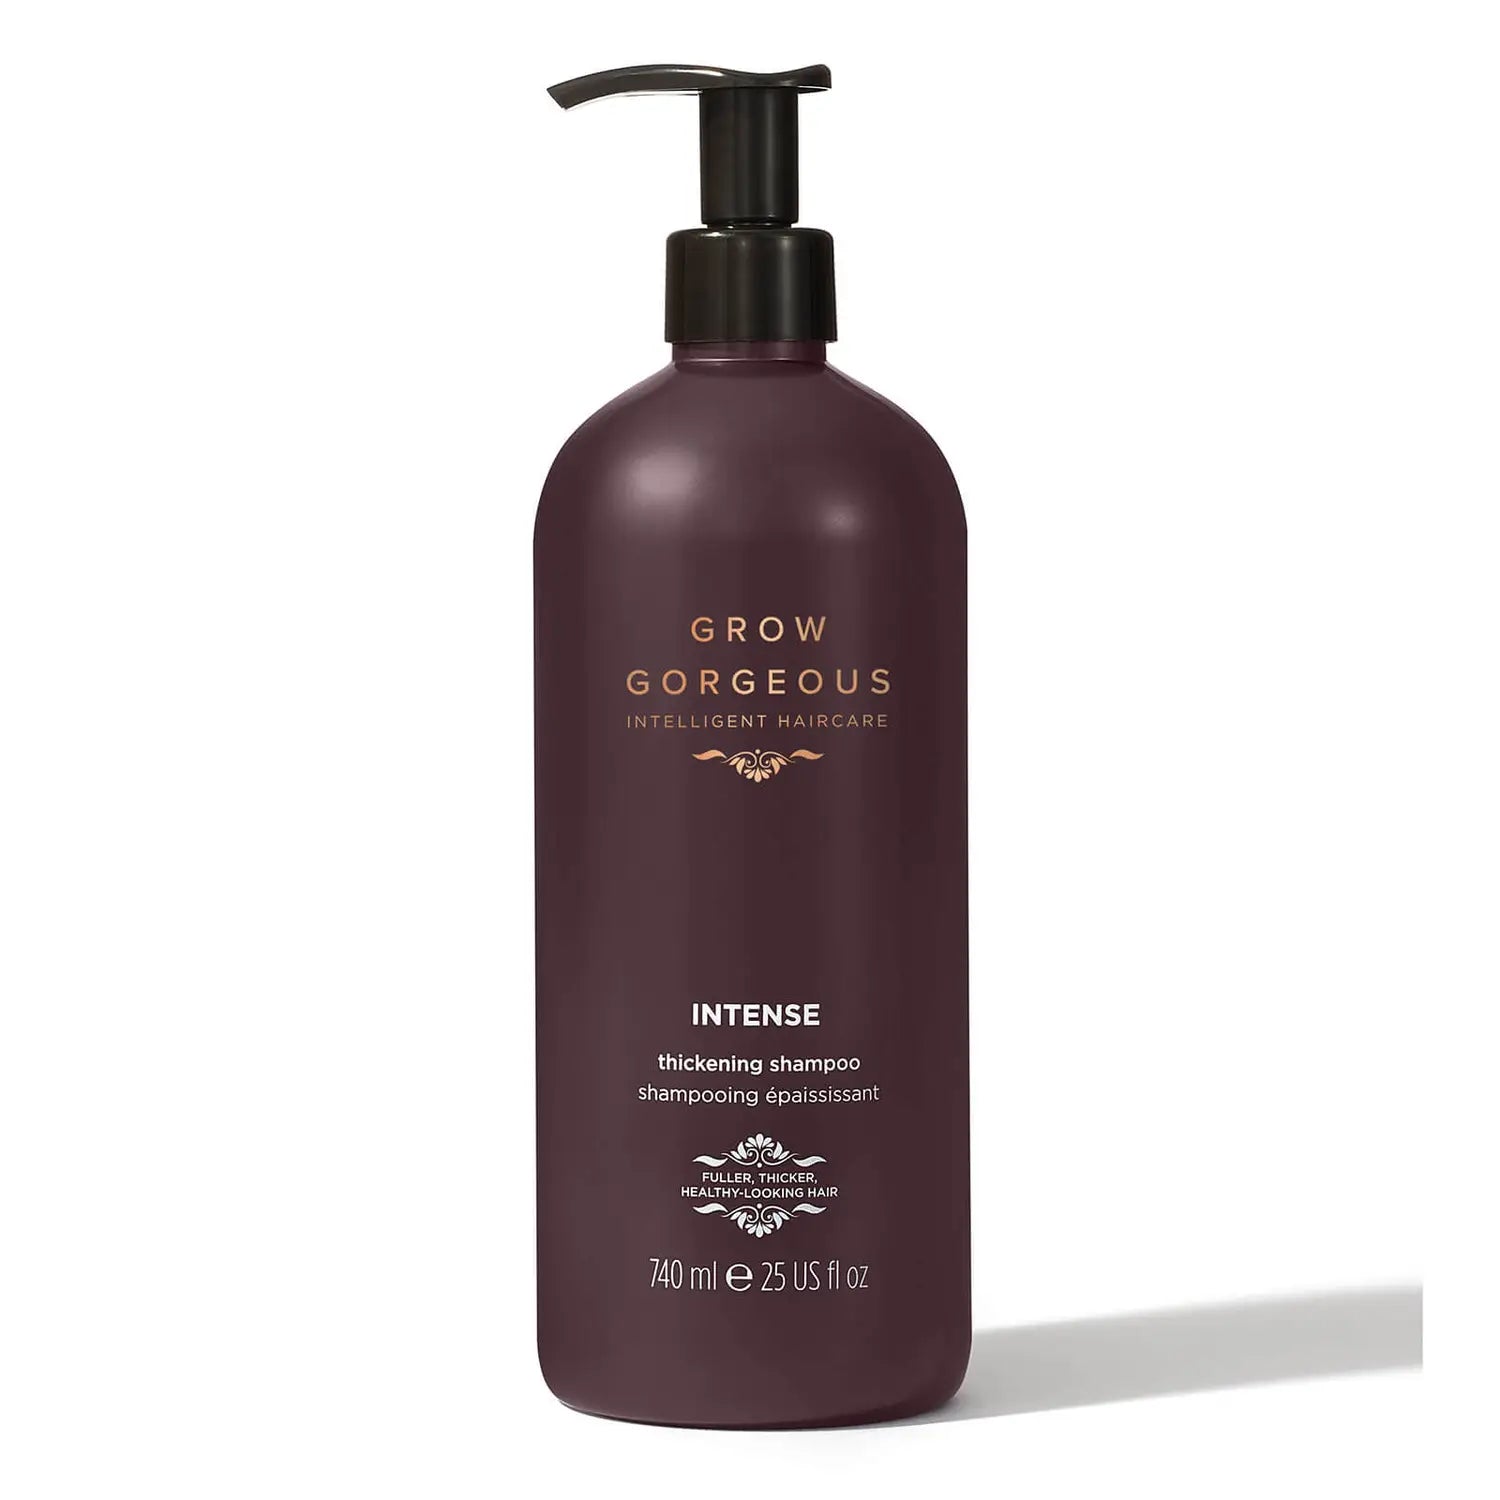 Grow Gorgeous Intense Thickening Shampoo, 740ml